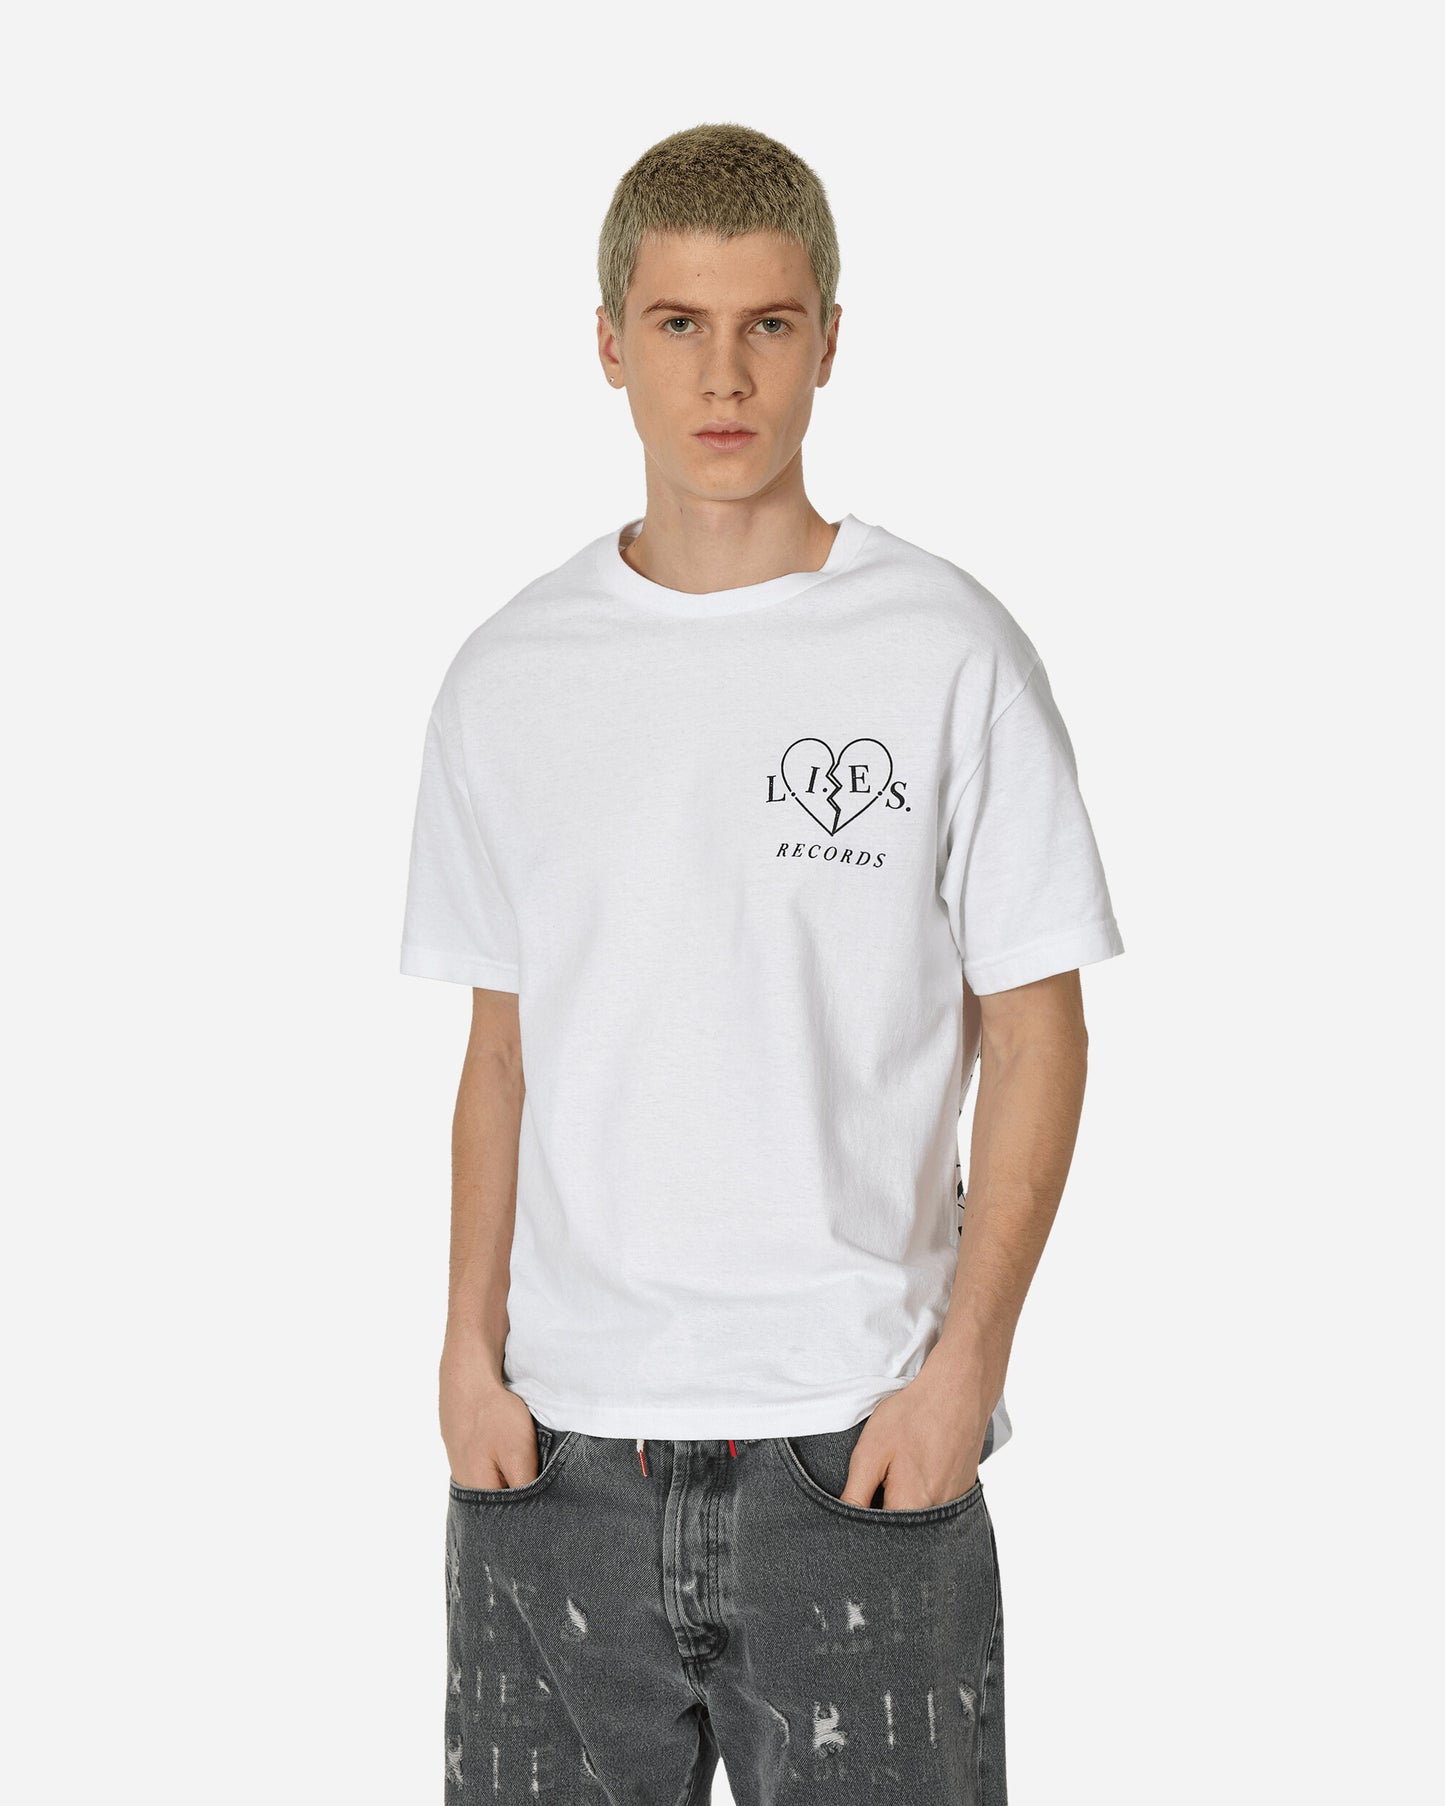 L.I.E.S. Records Tangled Trap S/S T-Shirt White T-Shirts Shortsleeve LIEST-007 007